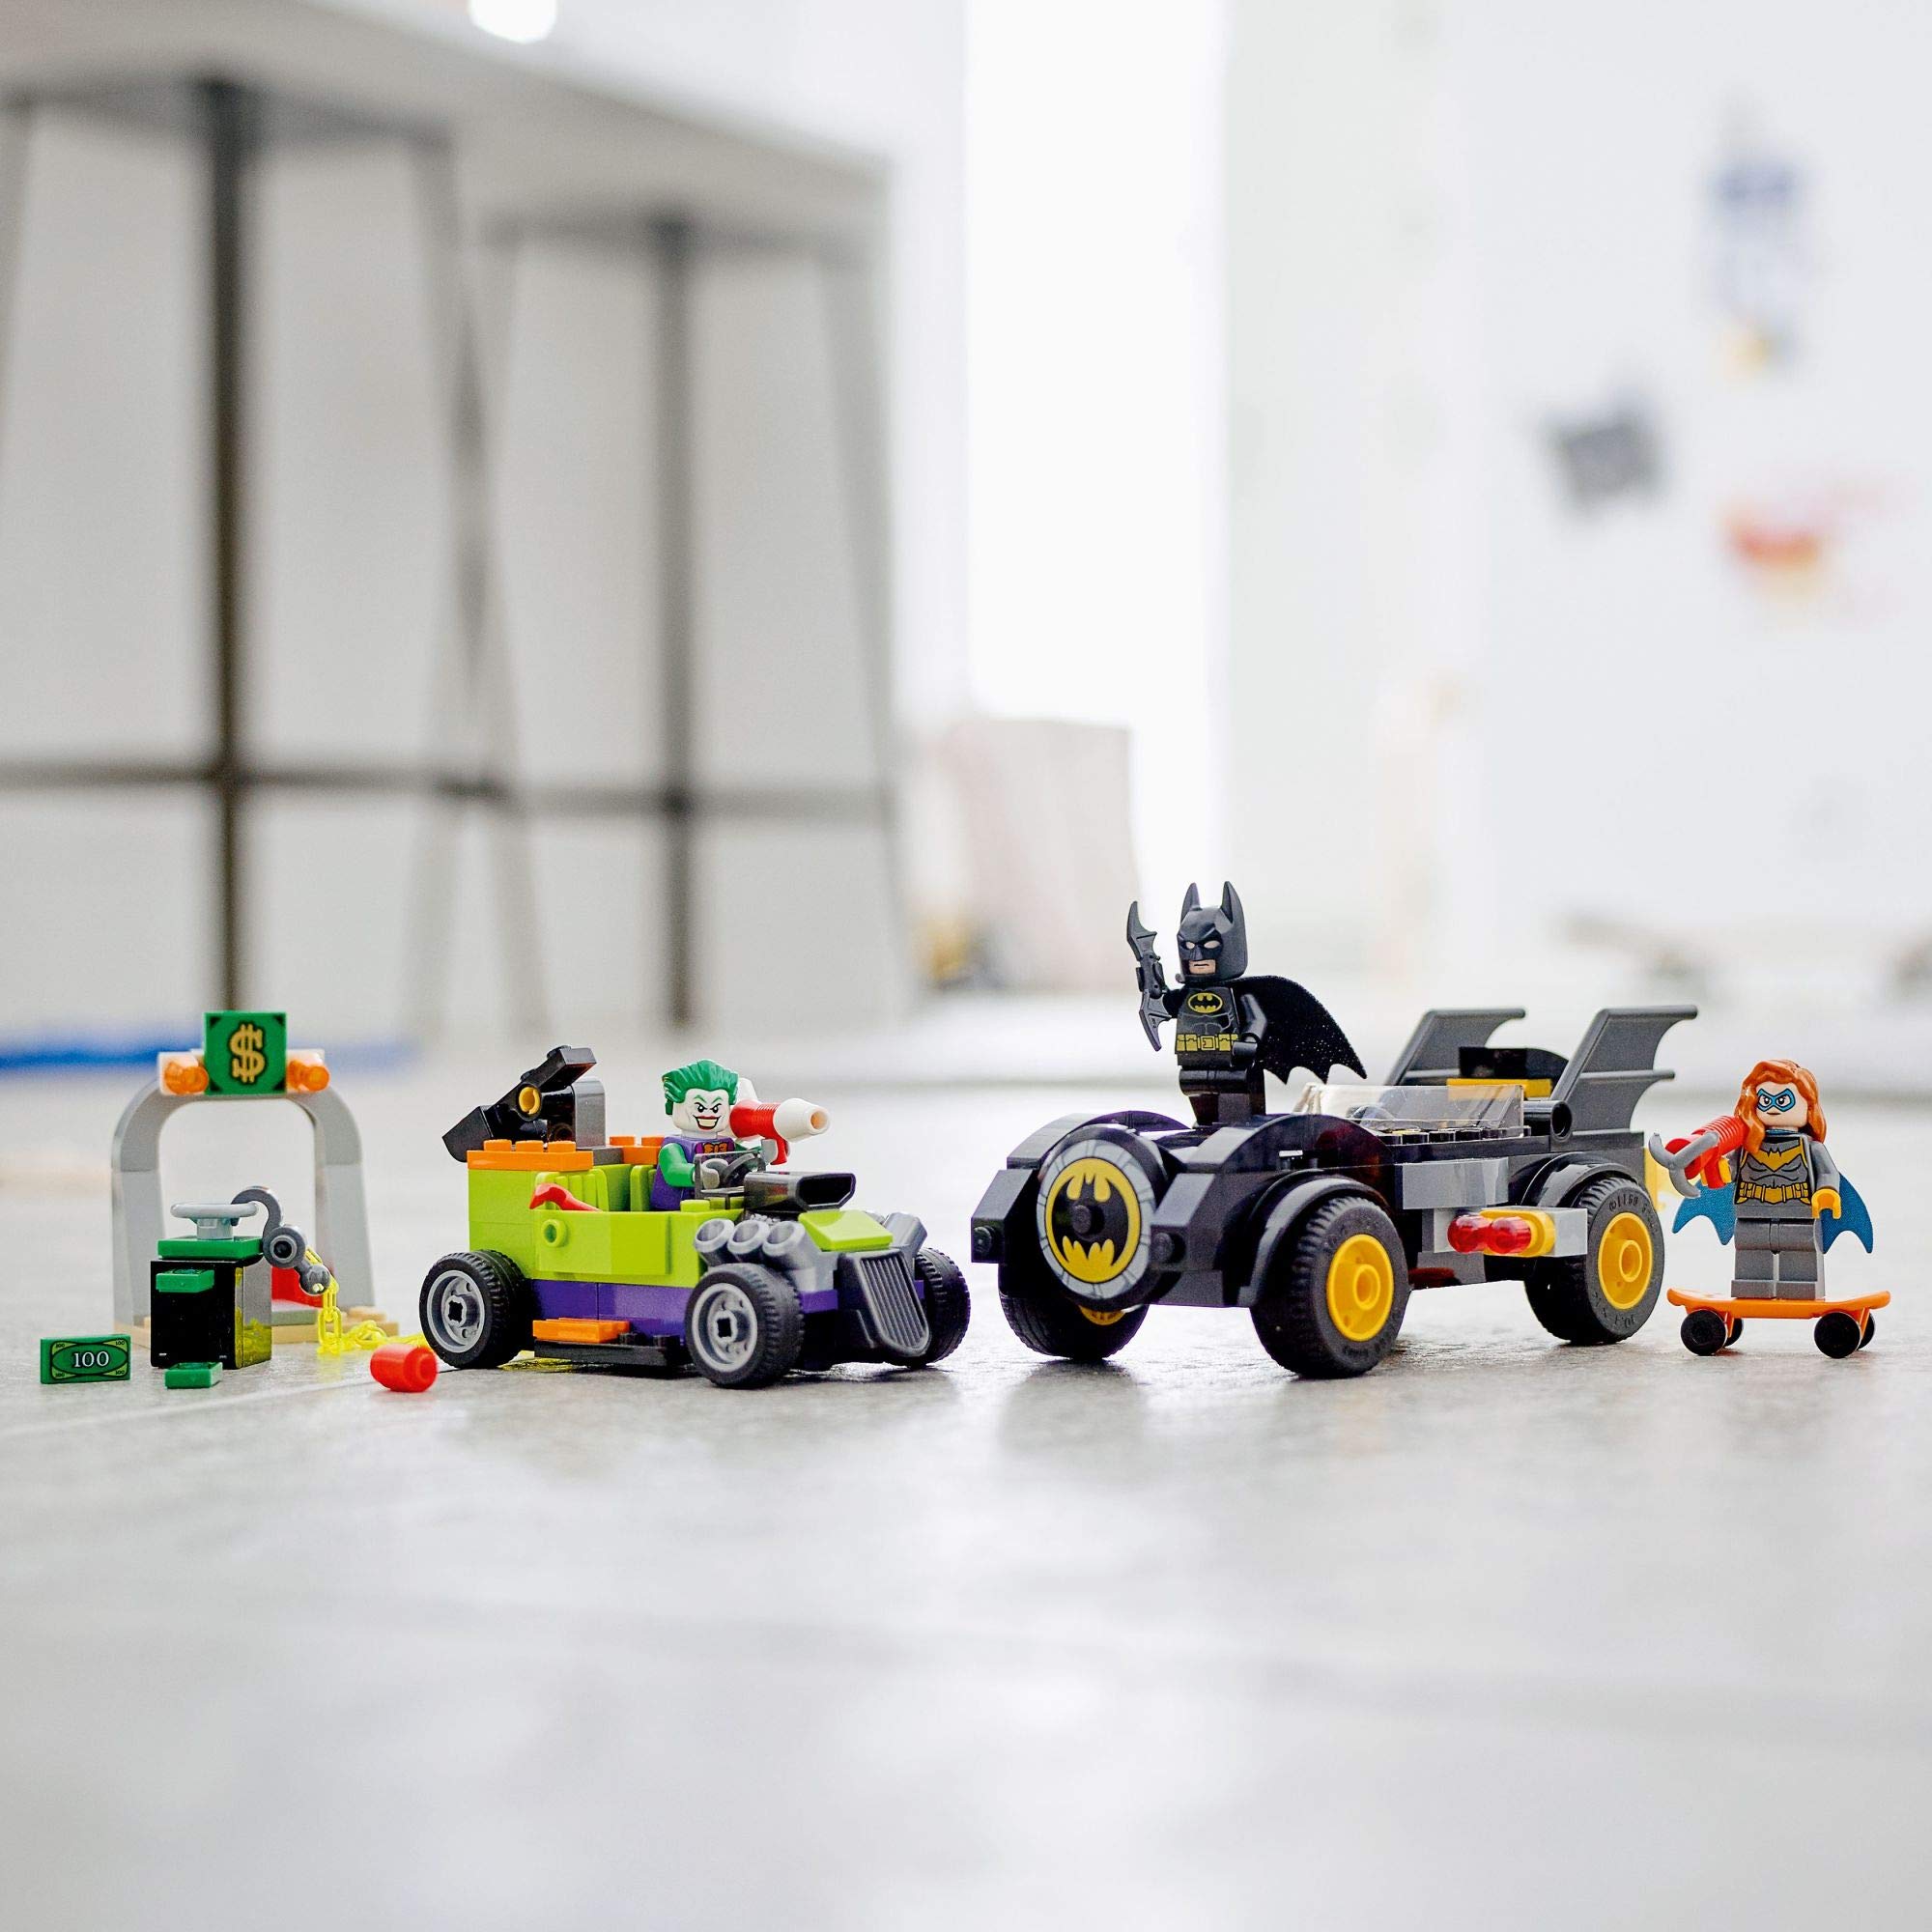 Mua LEGO DC Batman: Batman vs. The Joker: Batmobile Chase Building Toy;  Includes Batman, Batgirl and The Joker Minifigures Plus Buildable Batmobile  and Hot Rod, New 2021 (136 Pieces), Multi Color trên